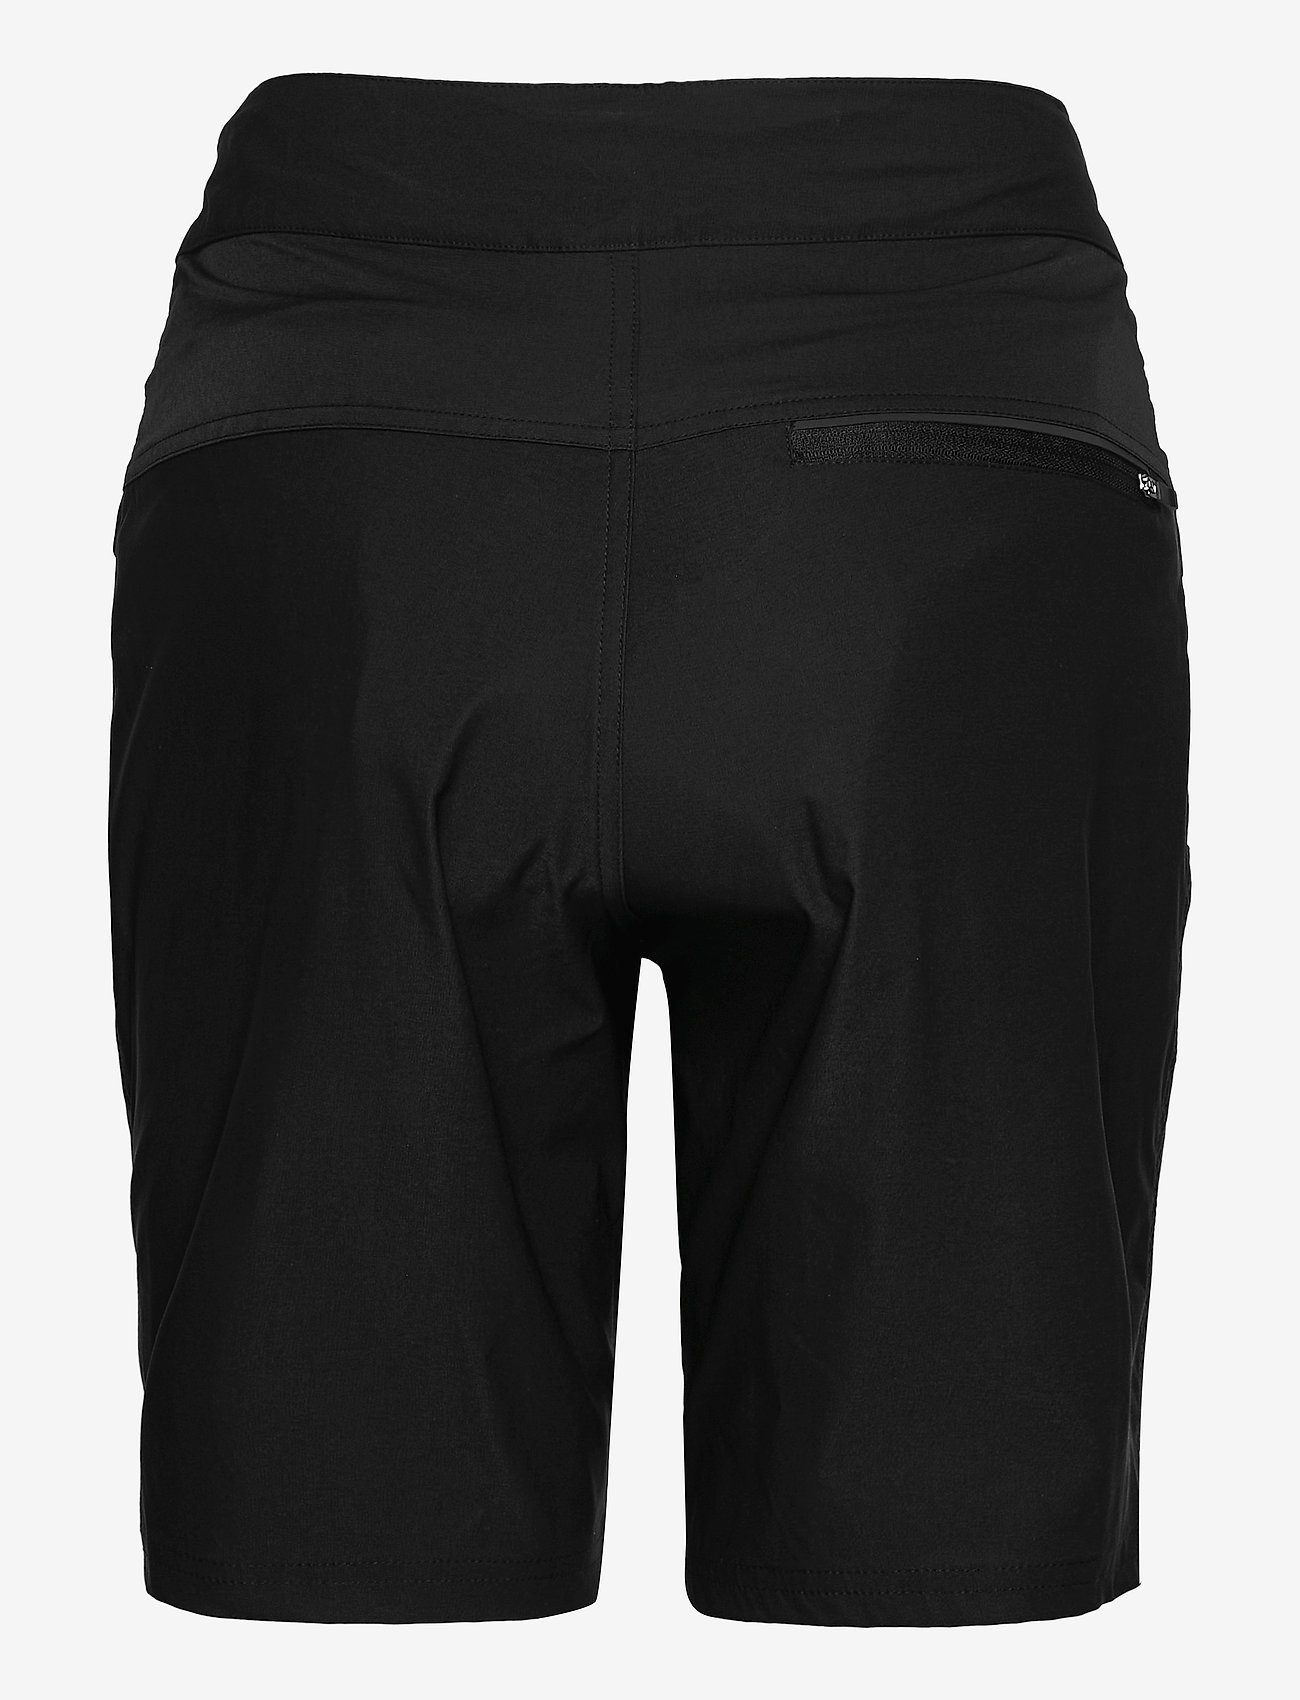 Craft - Core Offroad Xt Shorts W Pad W - sports shorts - black - 1